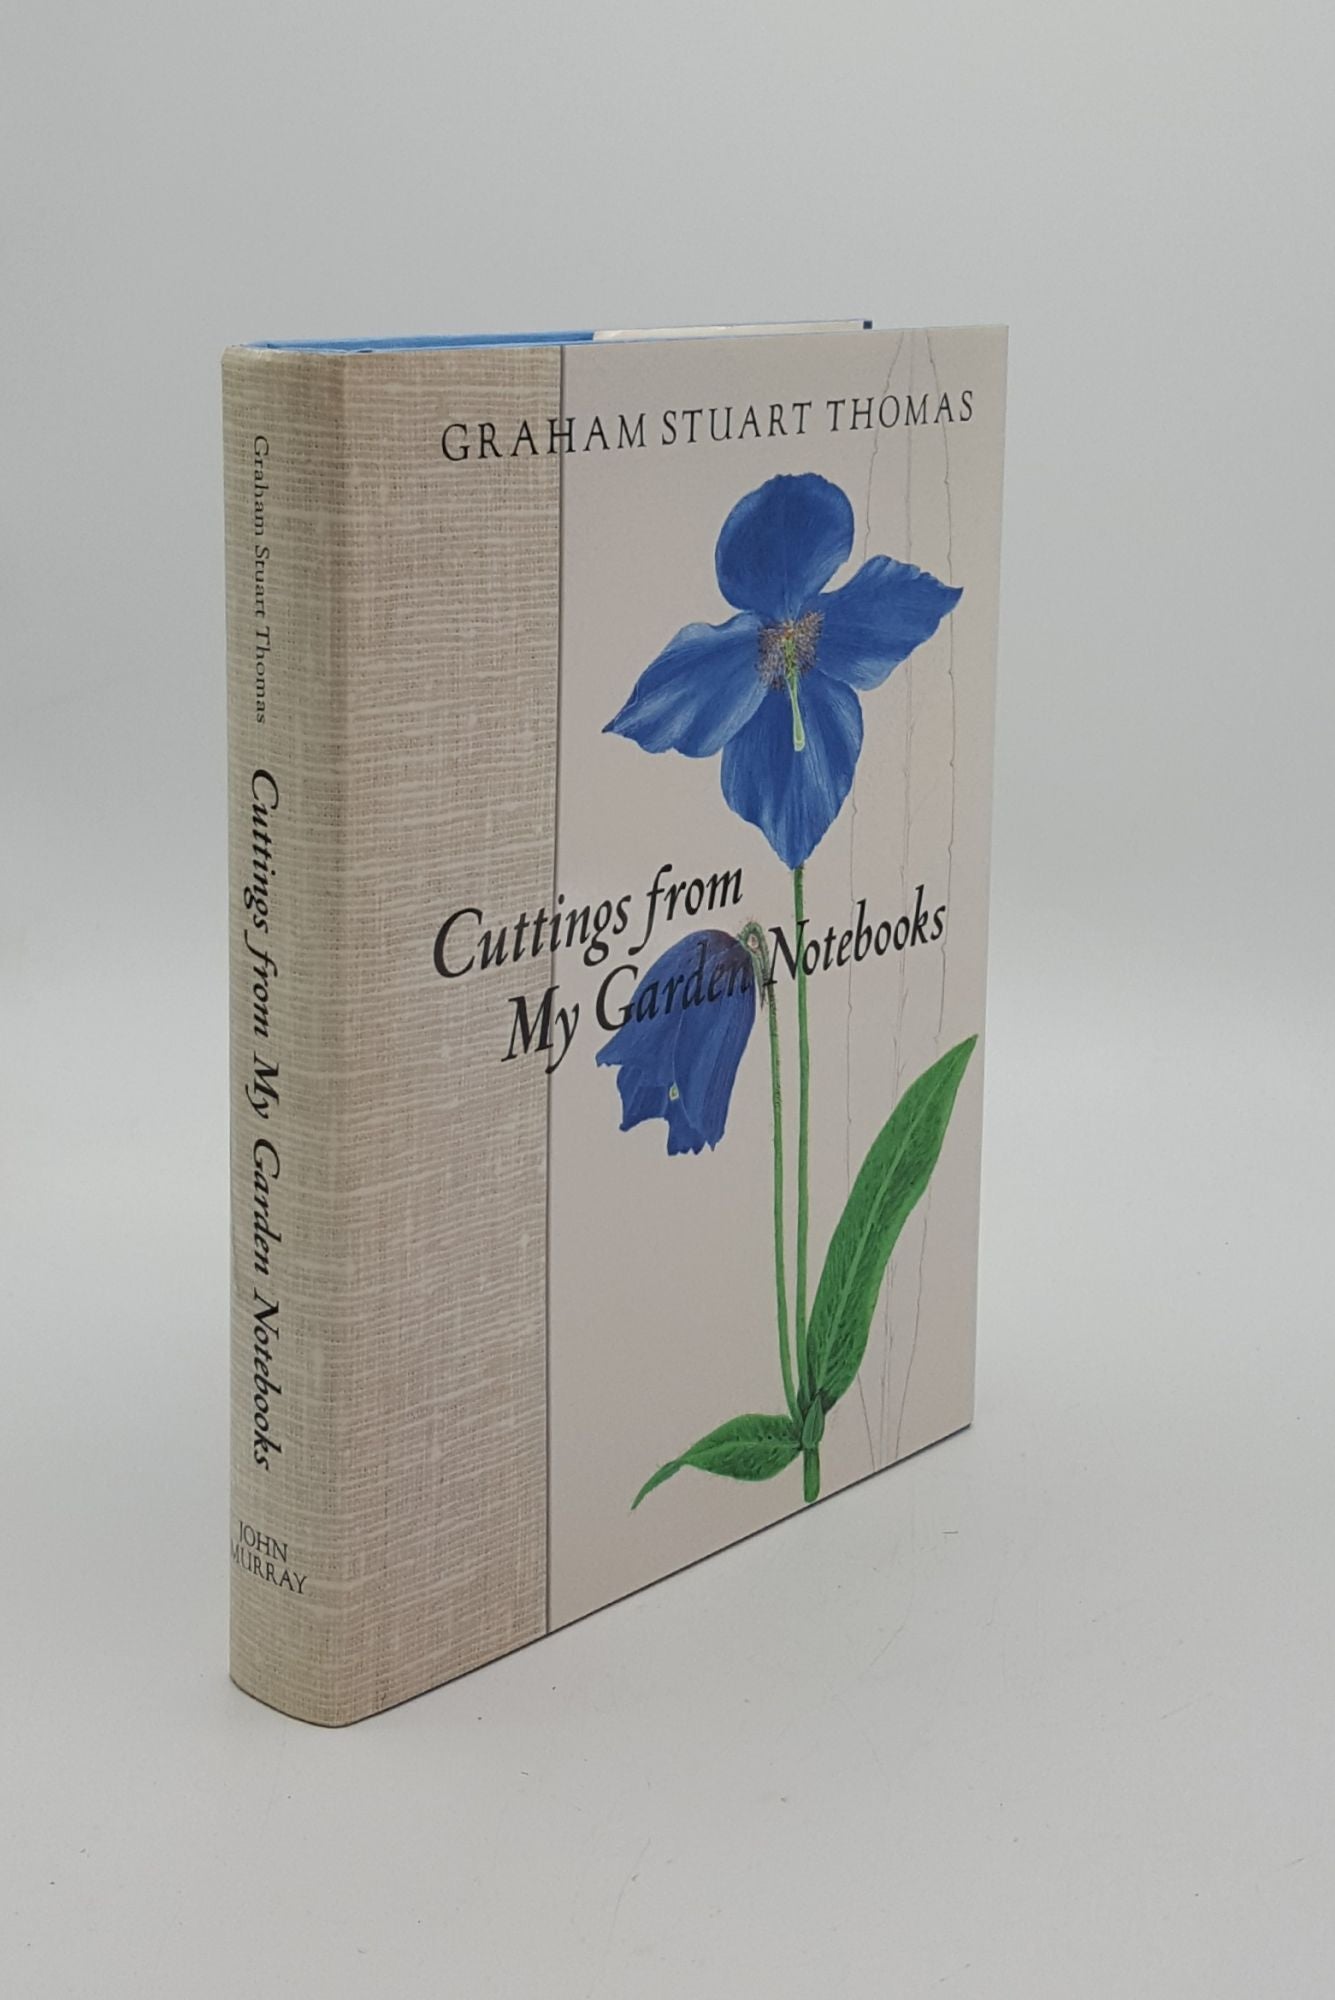 THOMAS Graham Stuart - Cuttings from My Garden Notebooks